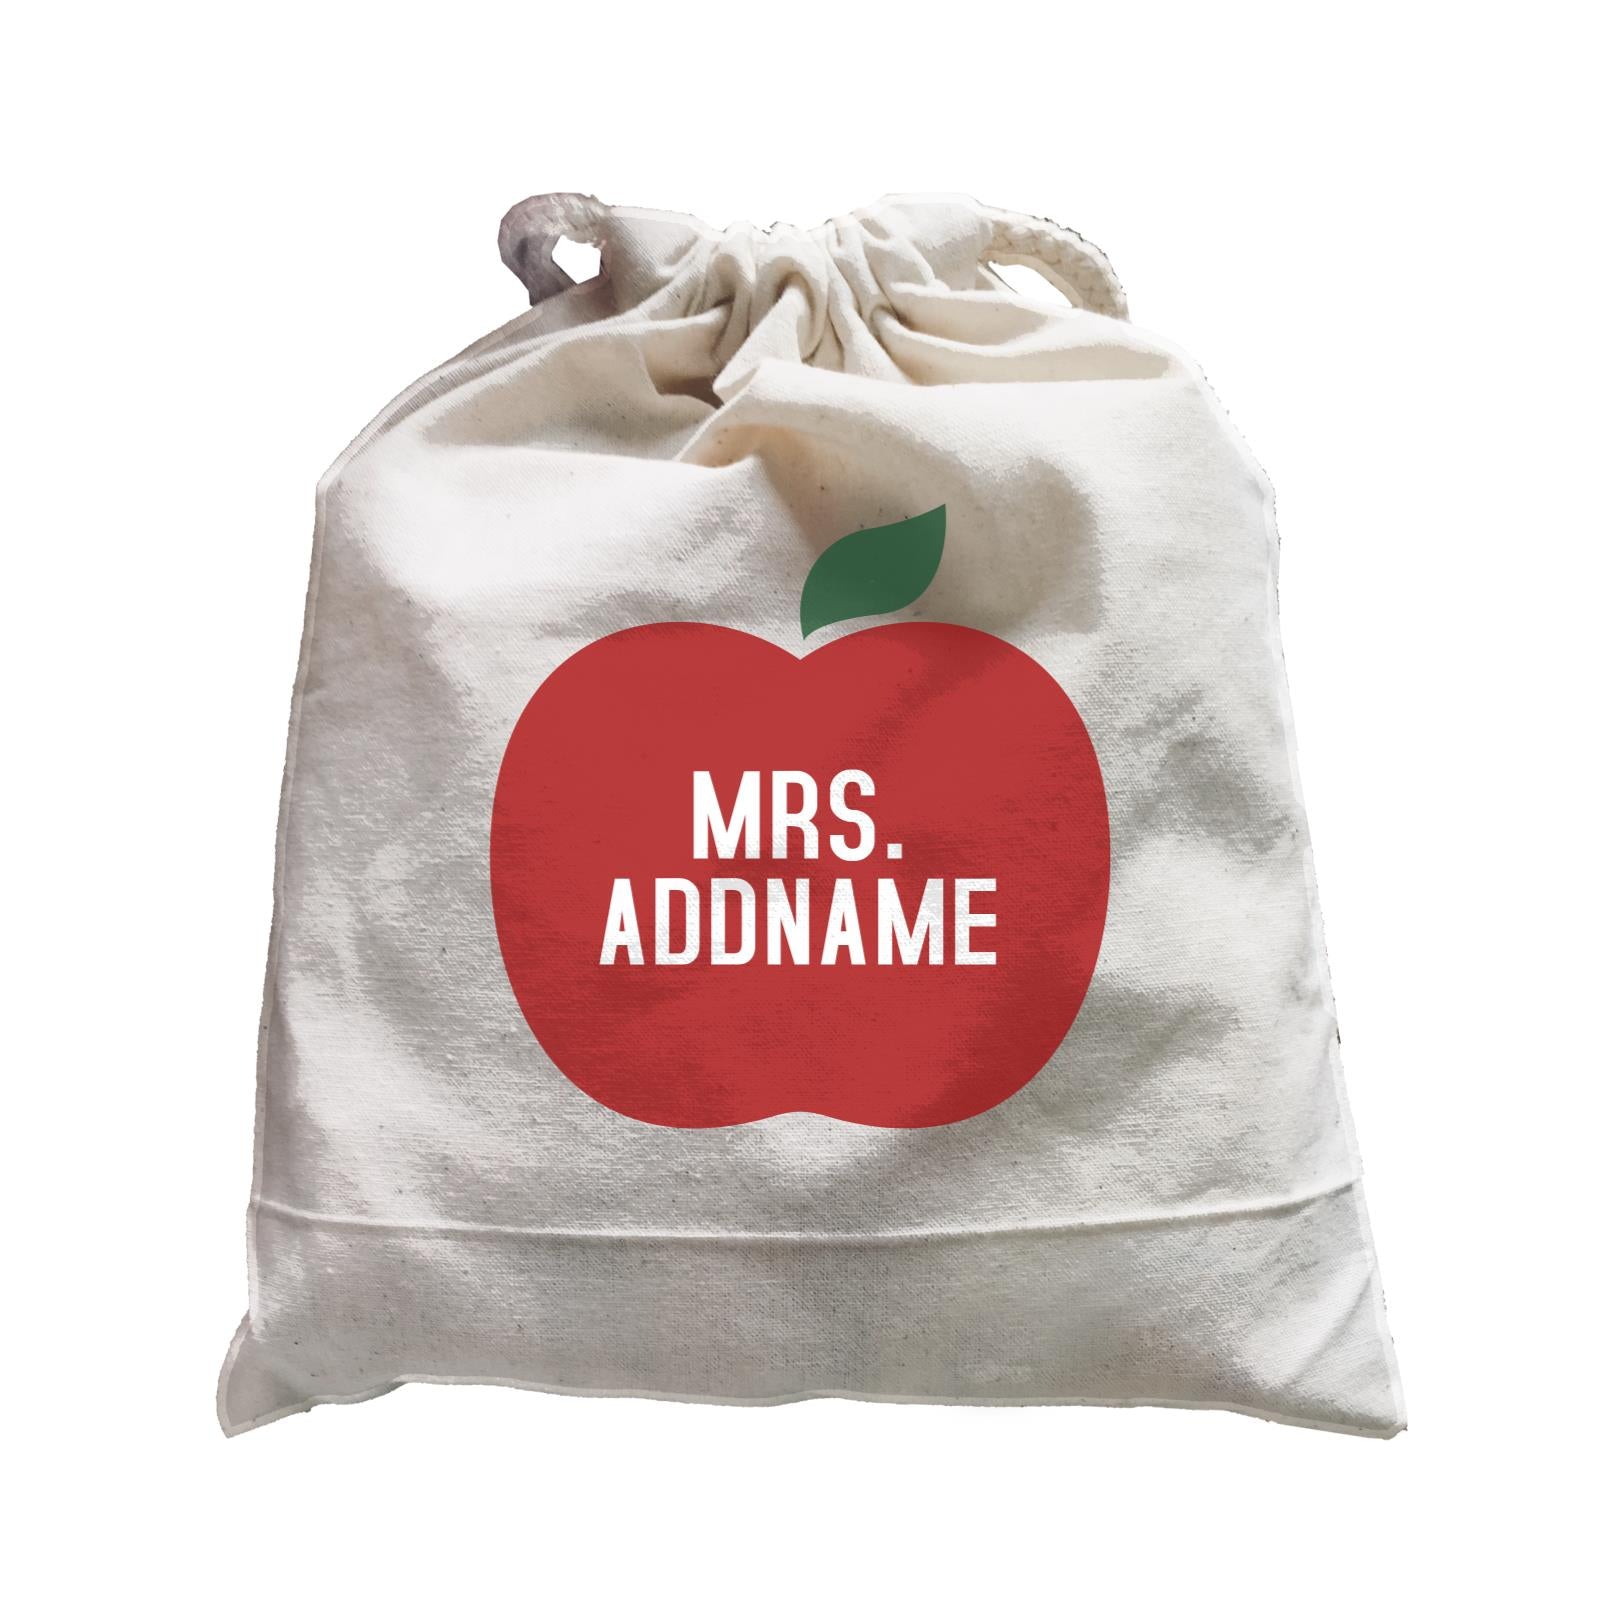 Teacher Addname Big Red Apple Mrs. Addname Satchel